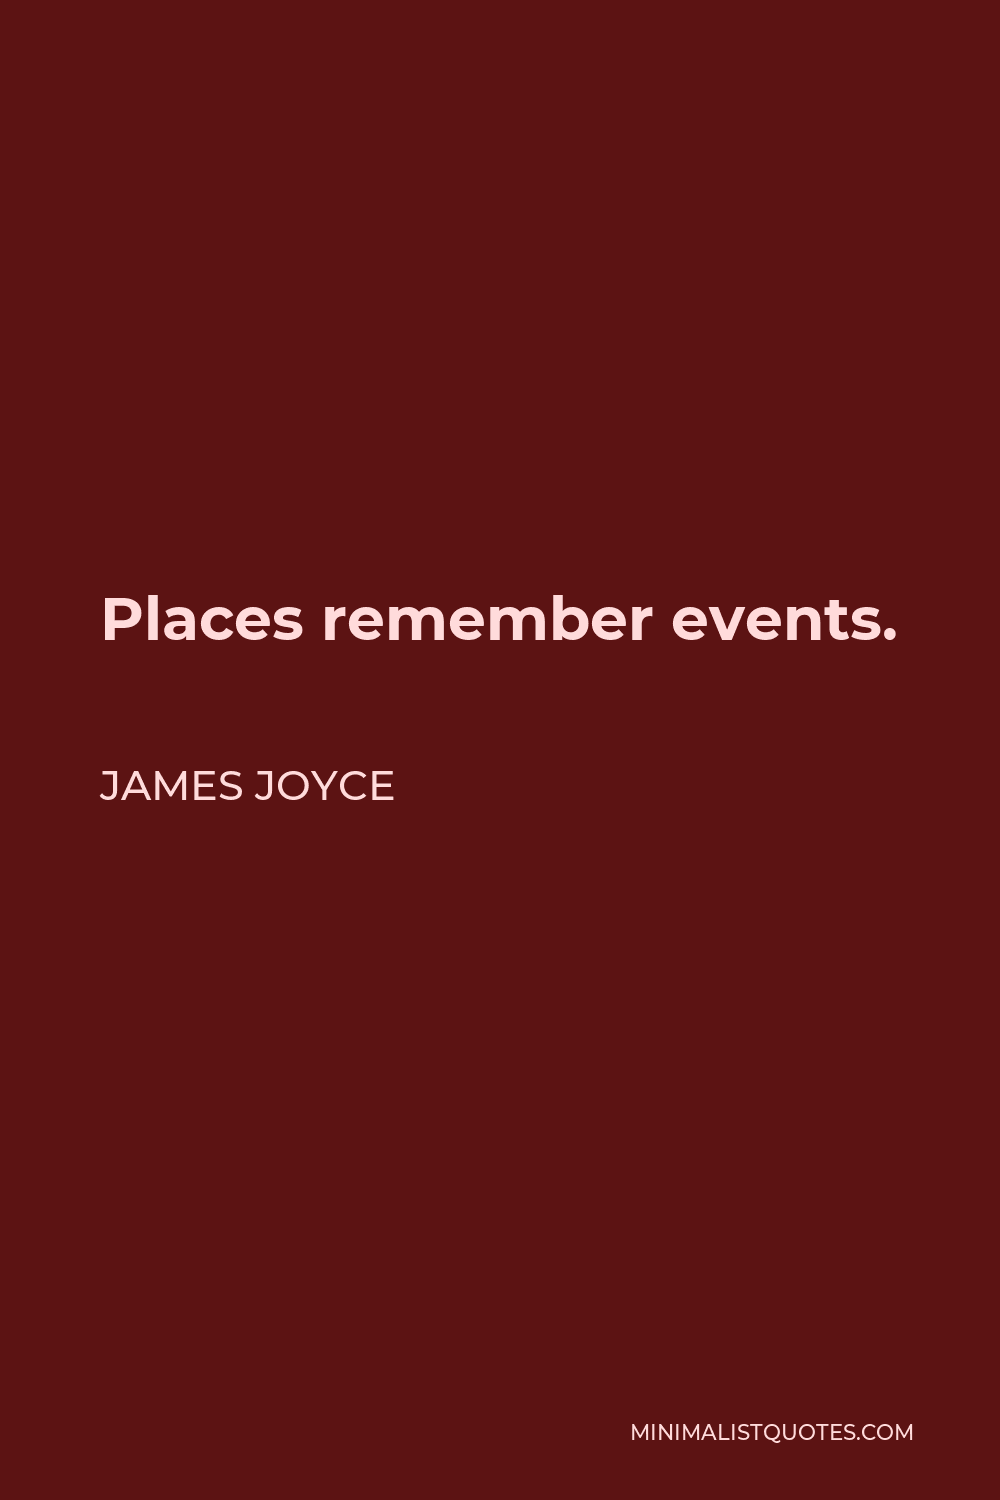 James Joyce Quote - Places remember events.